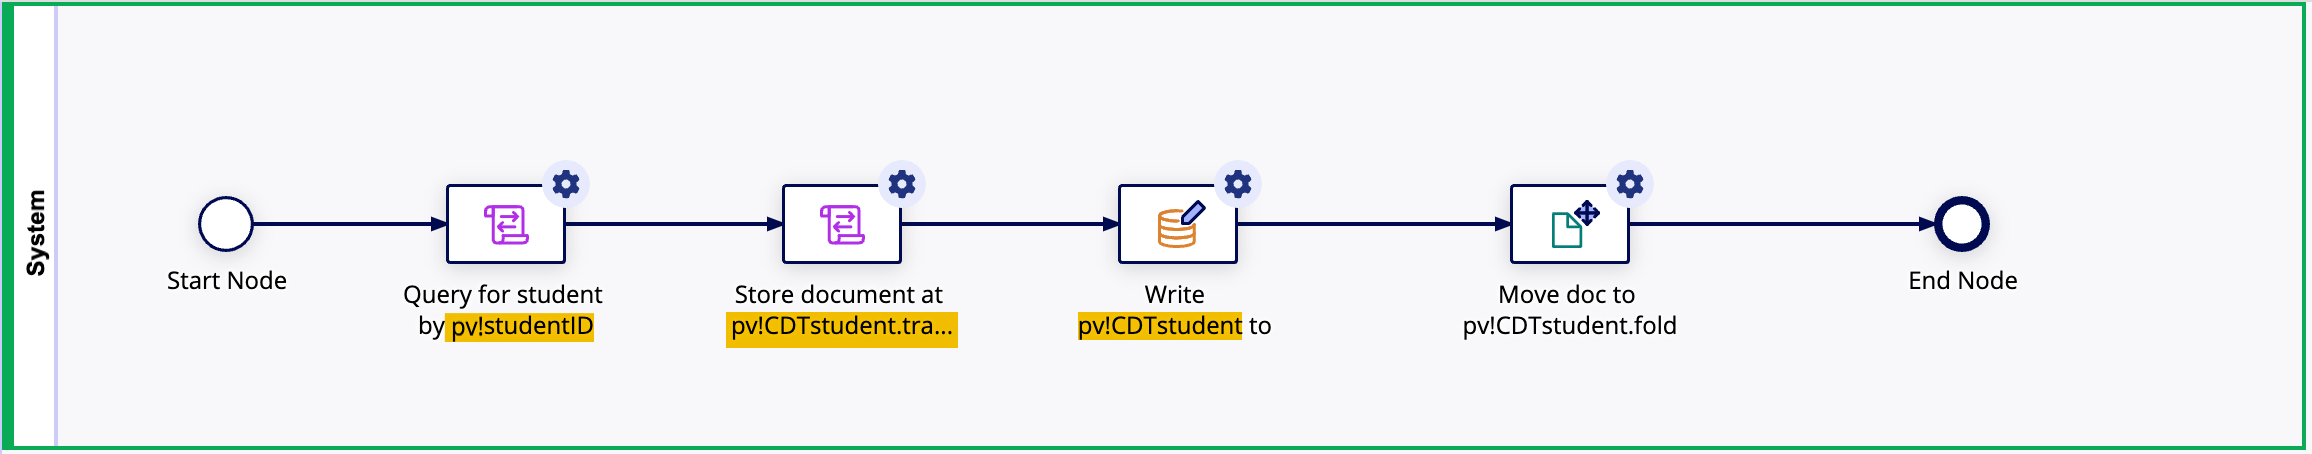 Upload Document Process Model